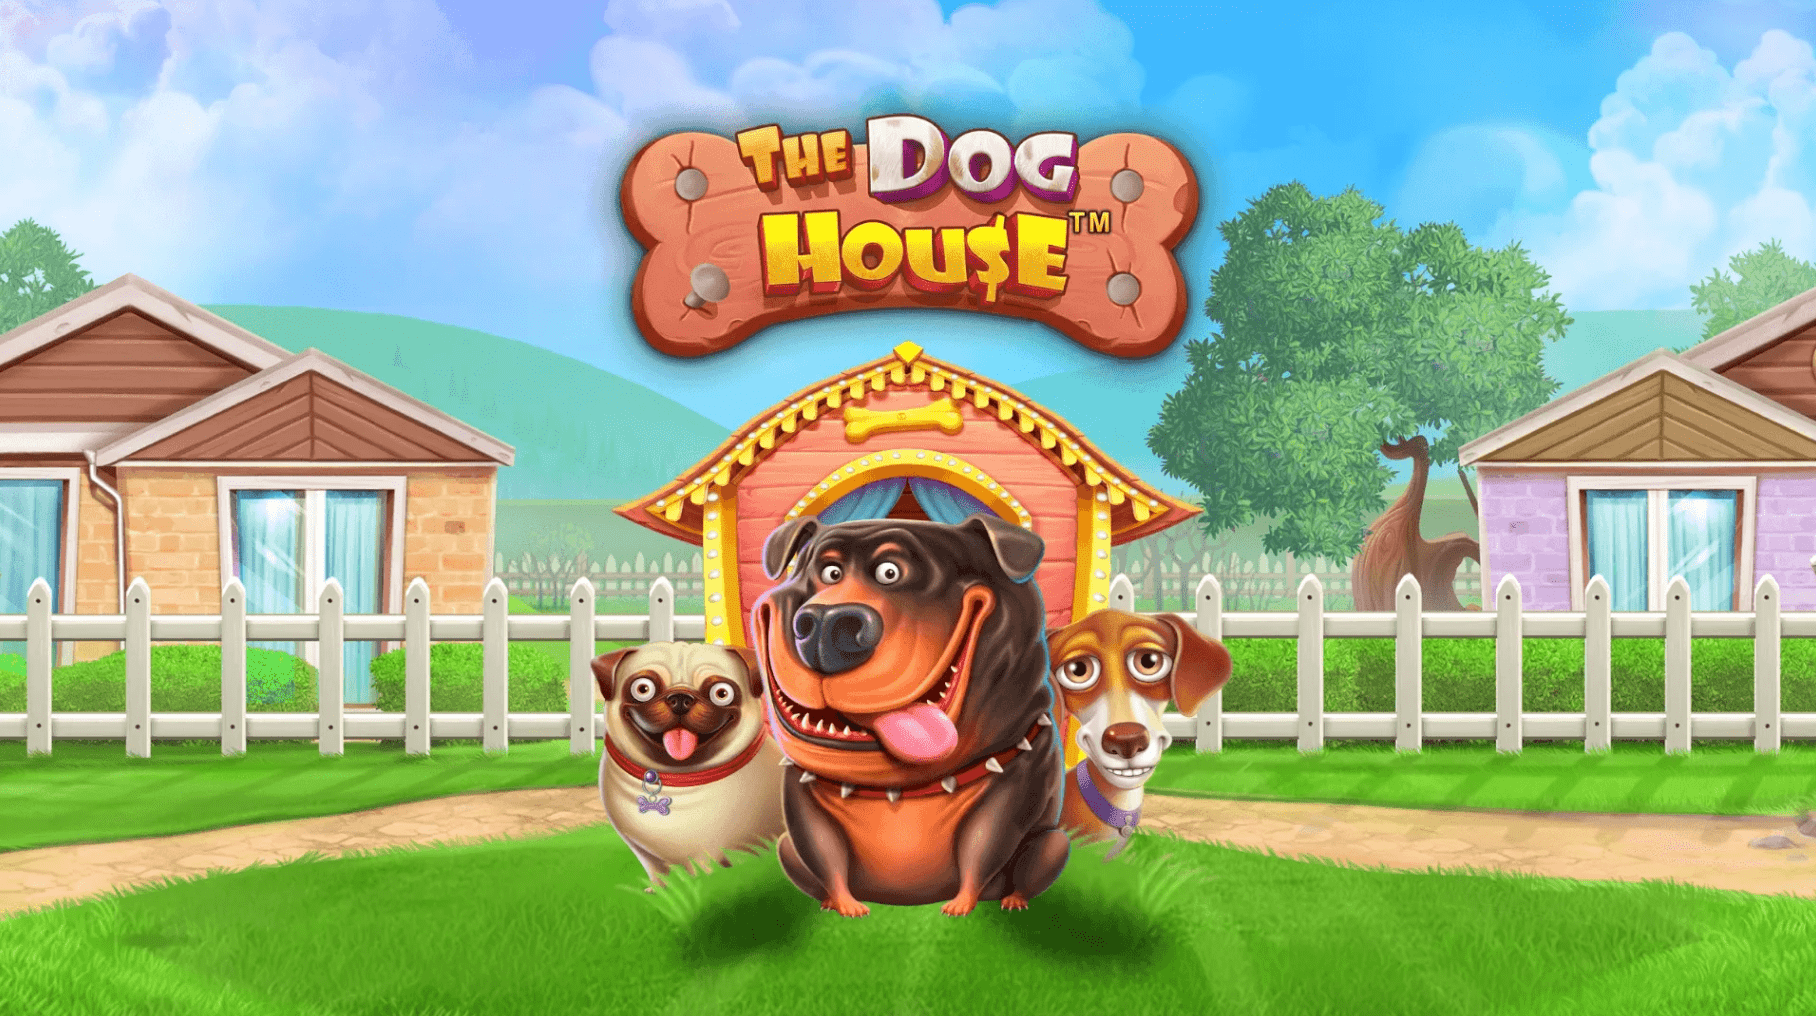 The dog house demo dog houses info. Дог Хаус слот. The Dog House игровой автомат. Dog House Pragmatic Play. Занос в the Dog House.